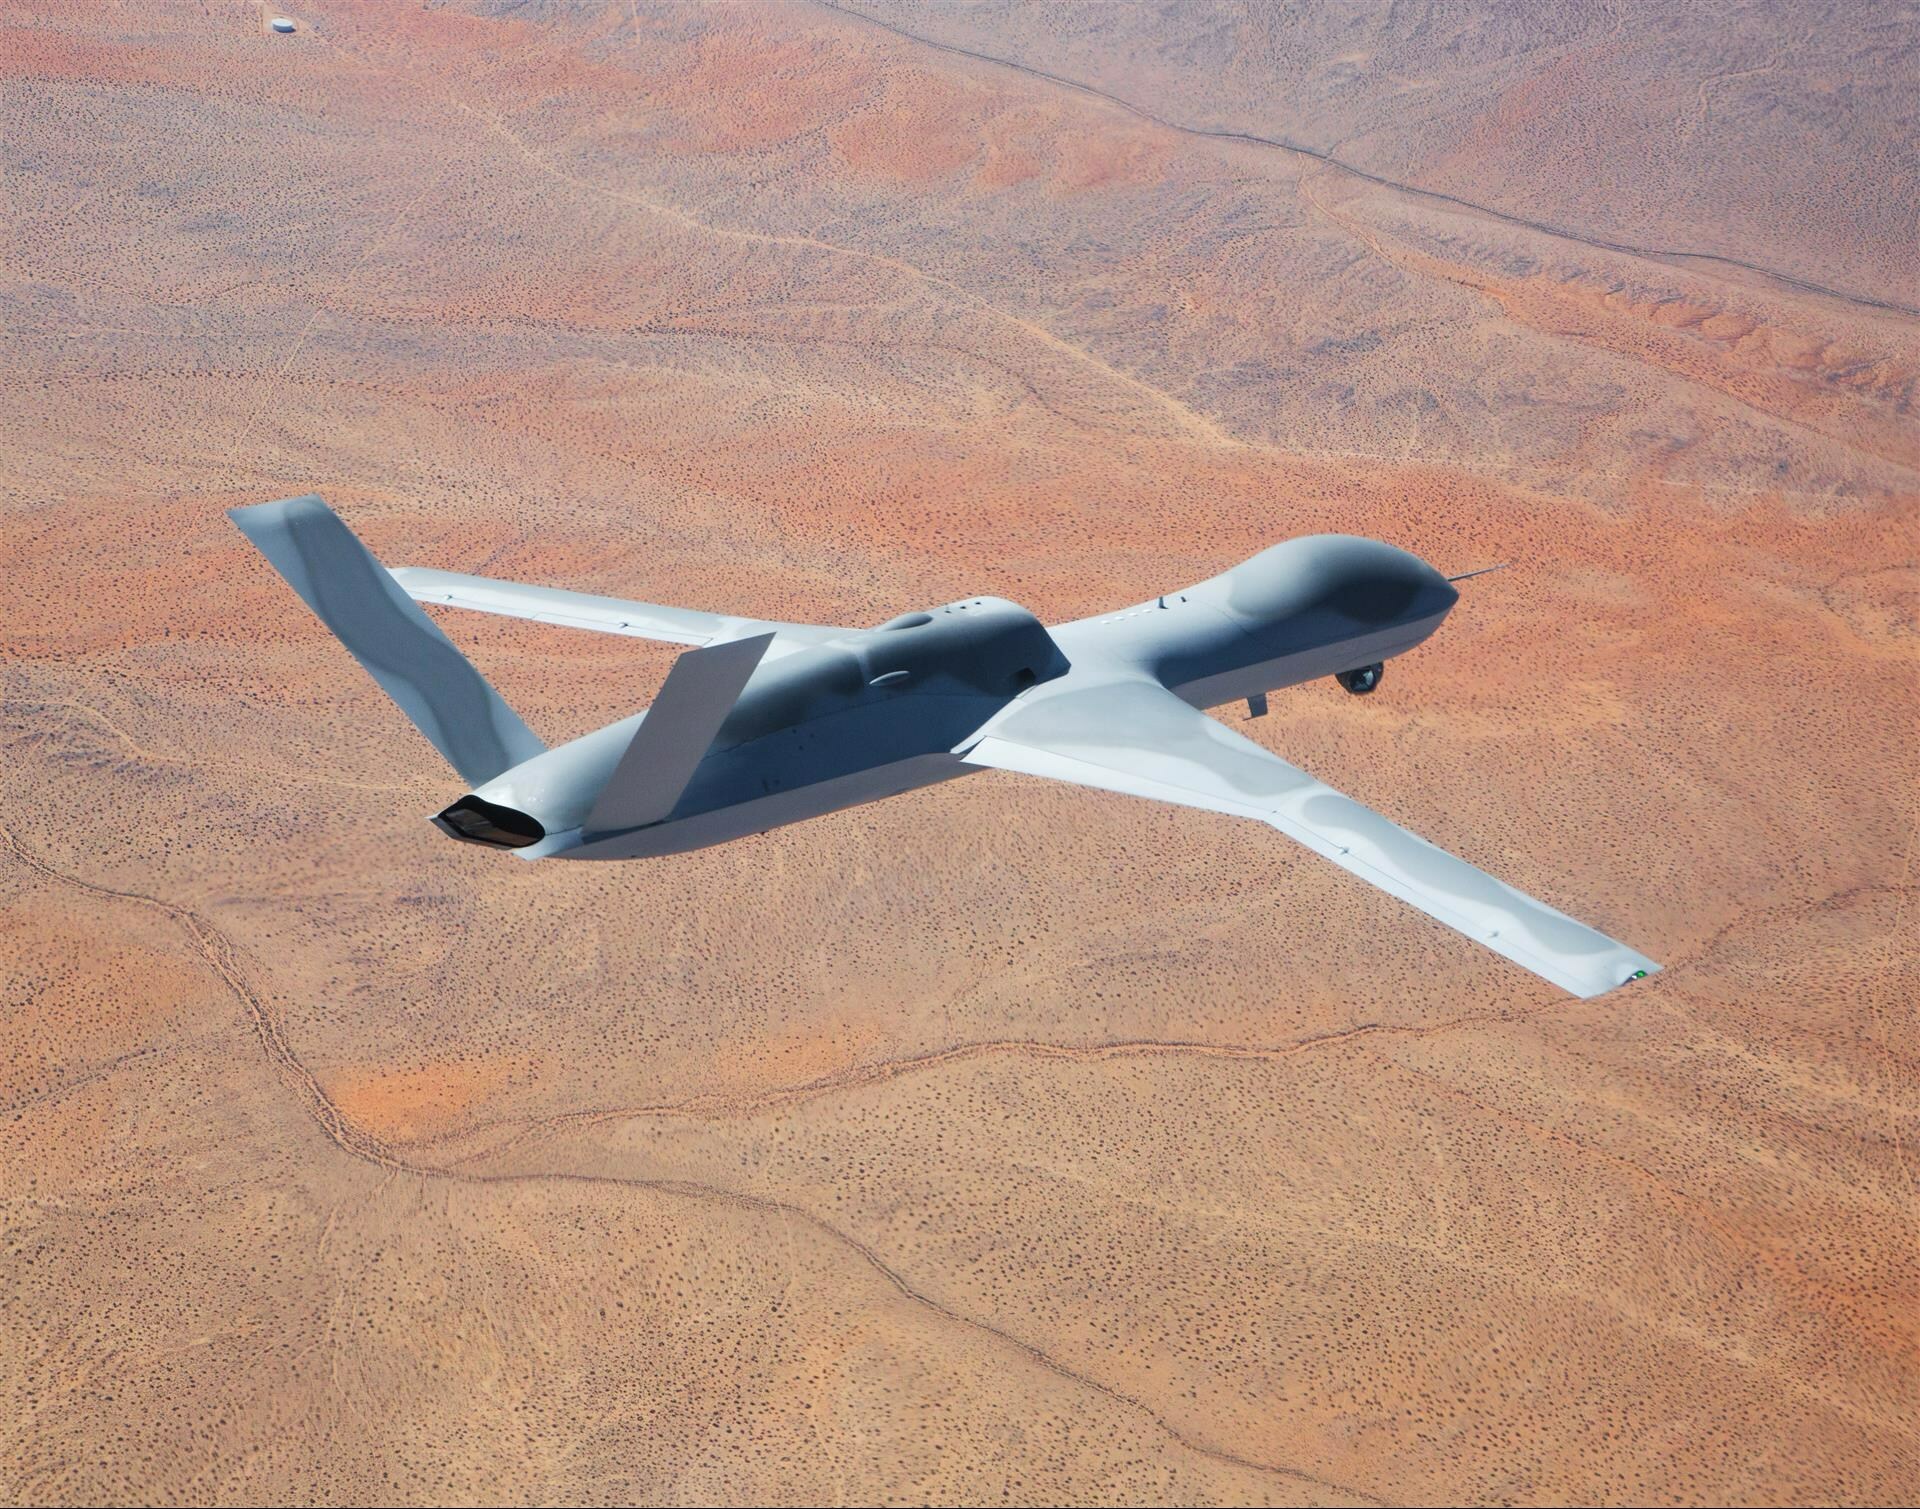 Scientific Systems Demonstrates Autonomous Teaming Behaviors Using Avenger Unmanned Combat Air Vehicle